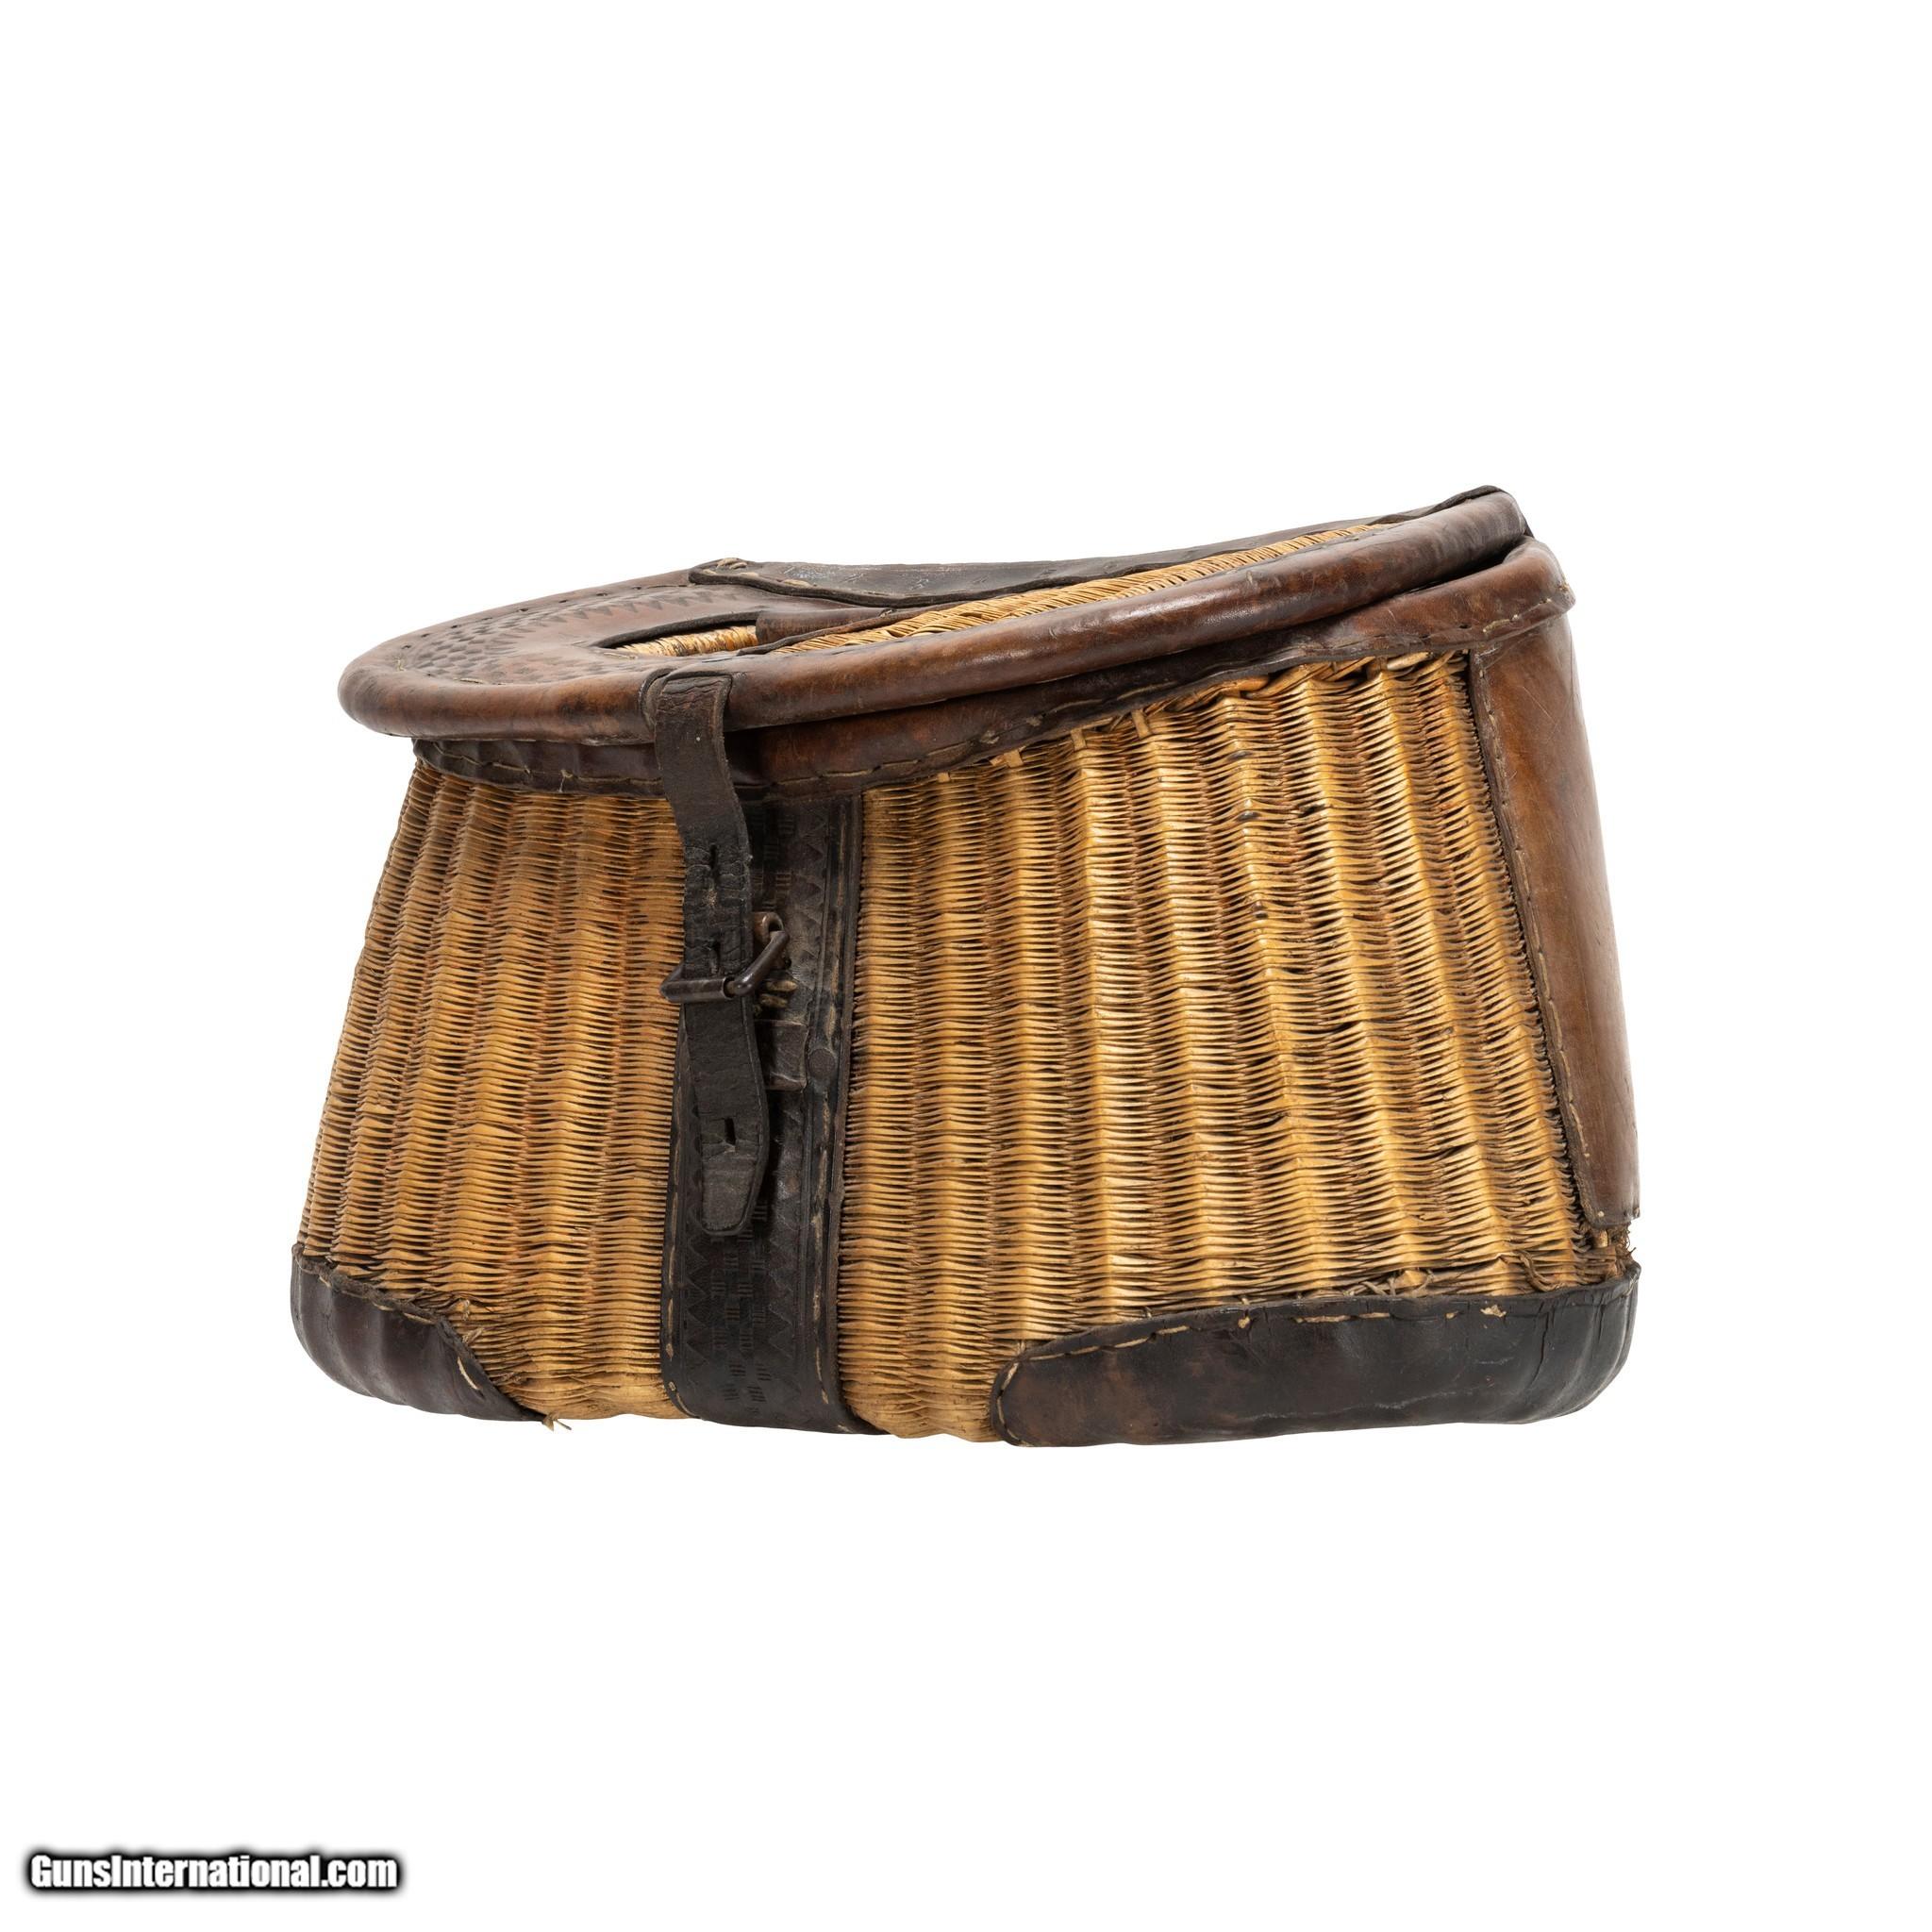 Rare Vintage Fishing Creel, Unique Vintage Wicker Fishing Basket